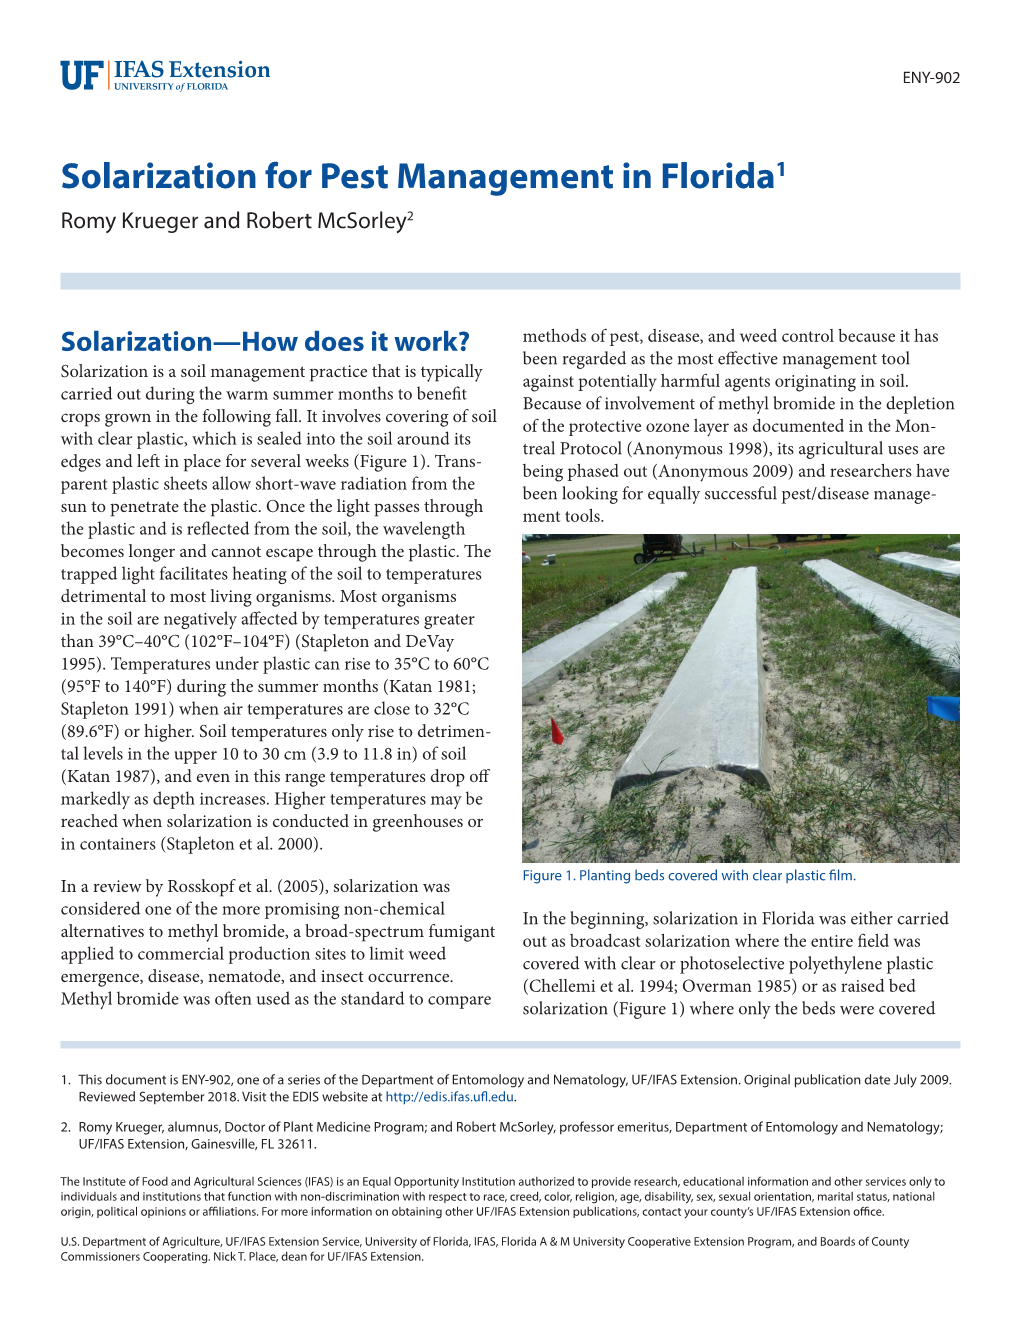 Solarization for Pest Management in Florida1 Romy Krueger and Robert Mcsorley2